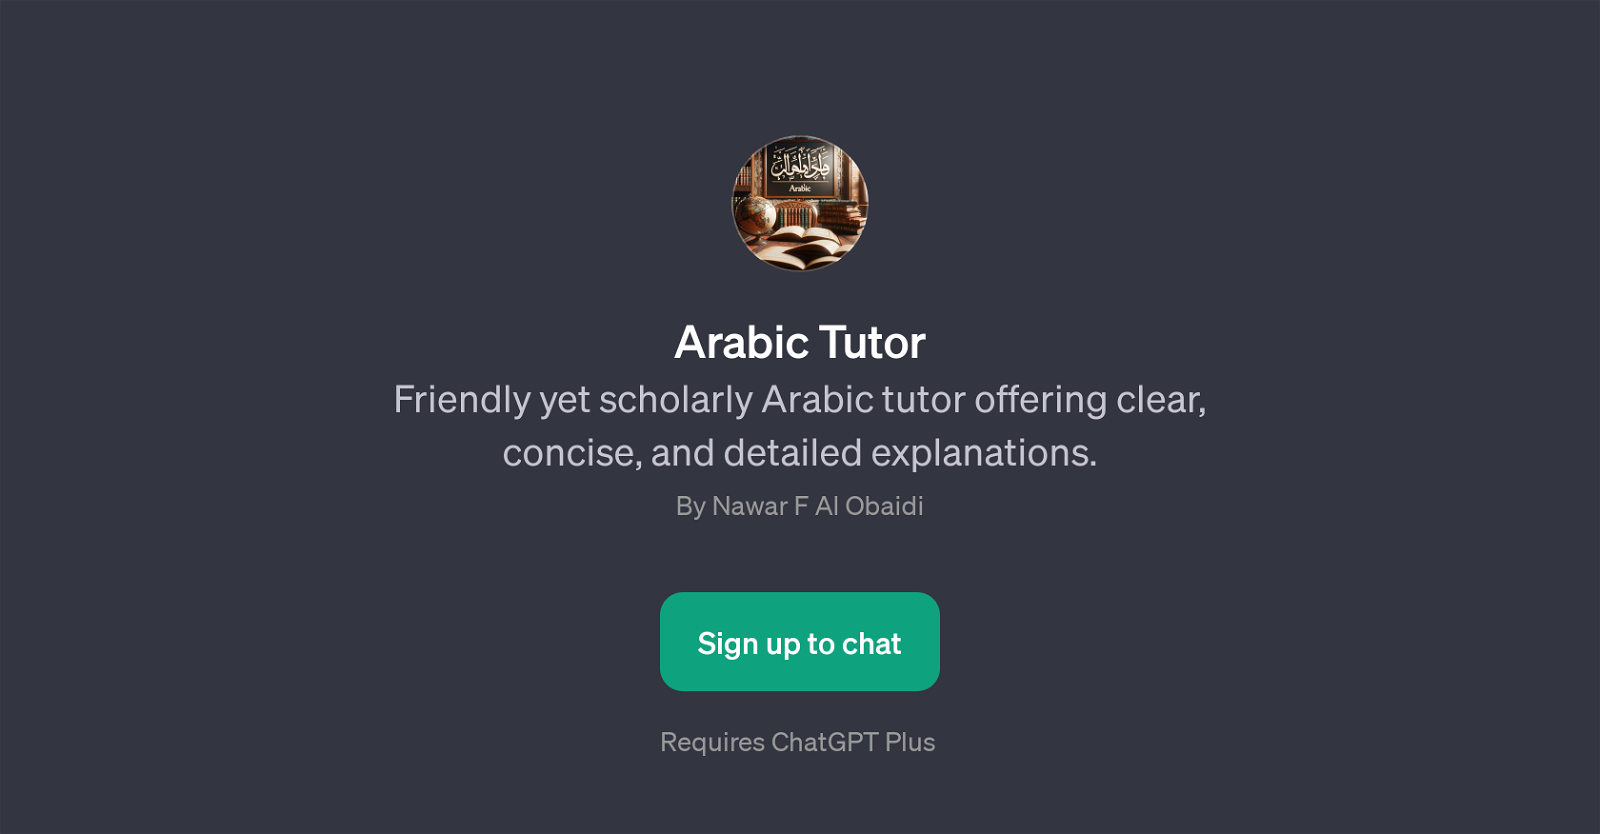 Arabic Tutor website